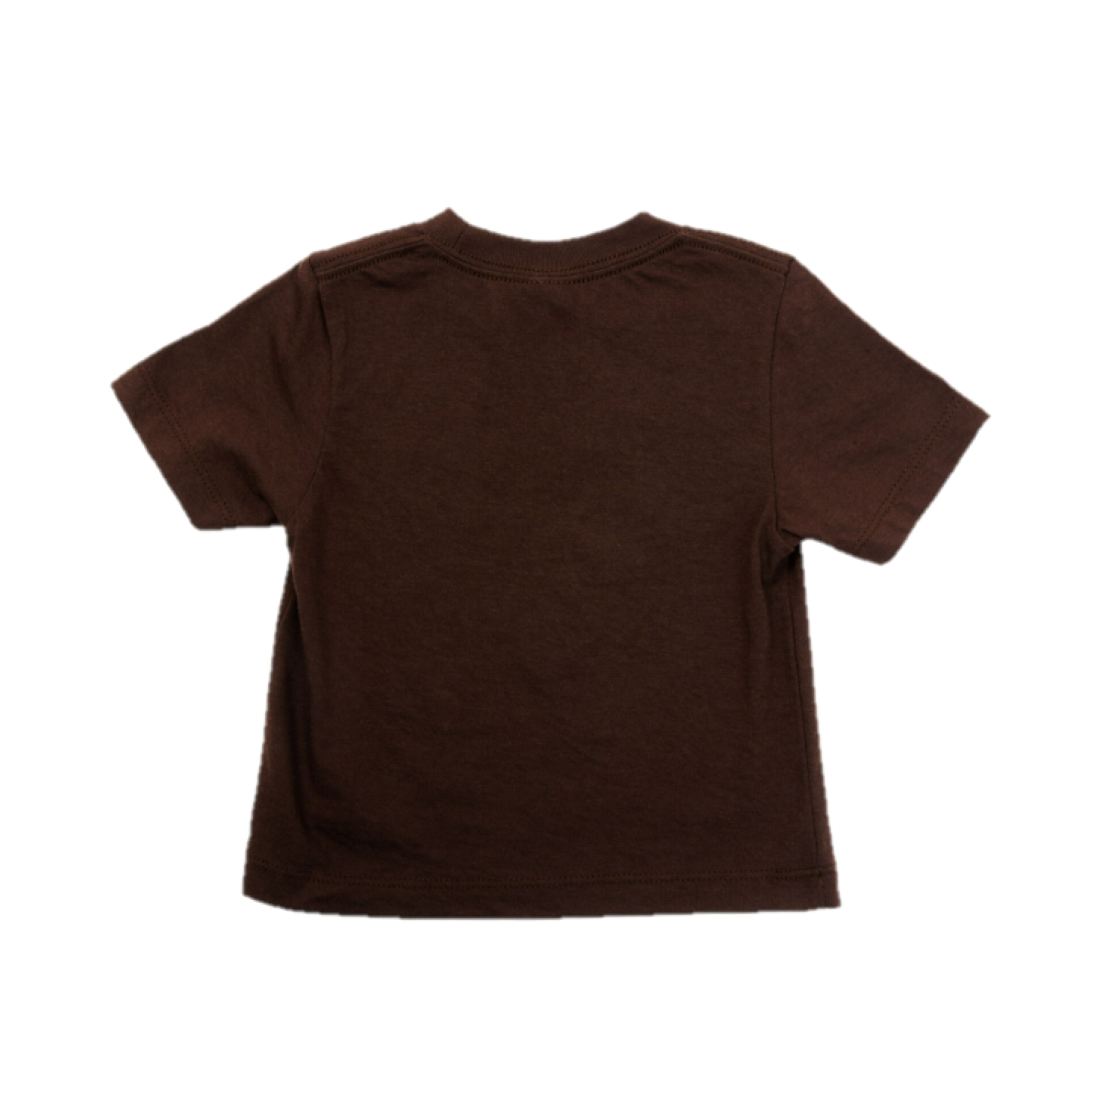 Cinch Toddler Boy's "Renegade Range Riders" Brown T-Shirt MTT7671086